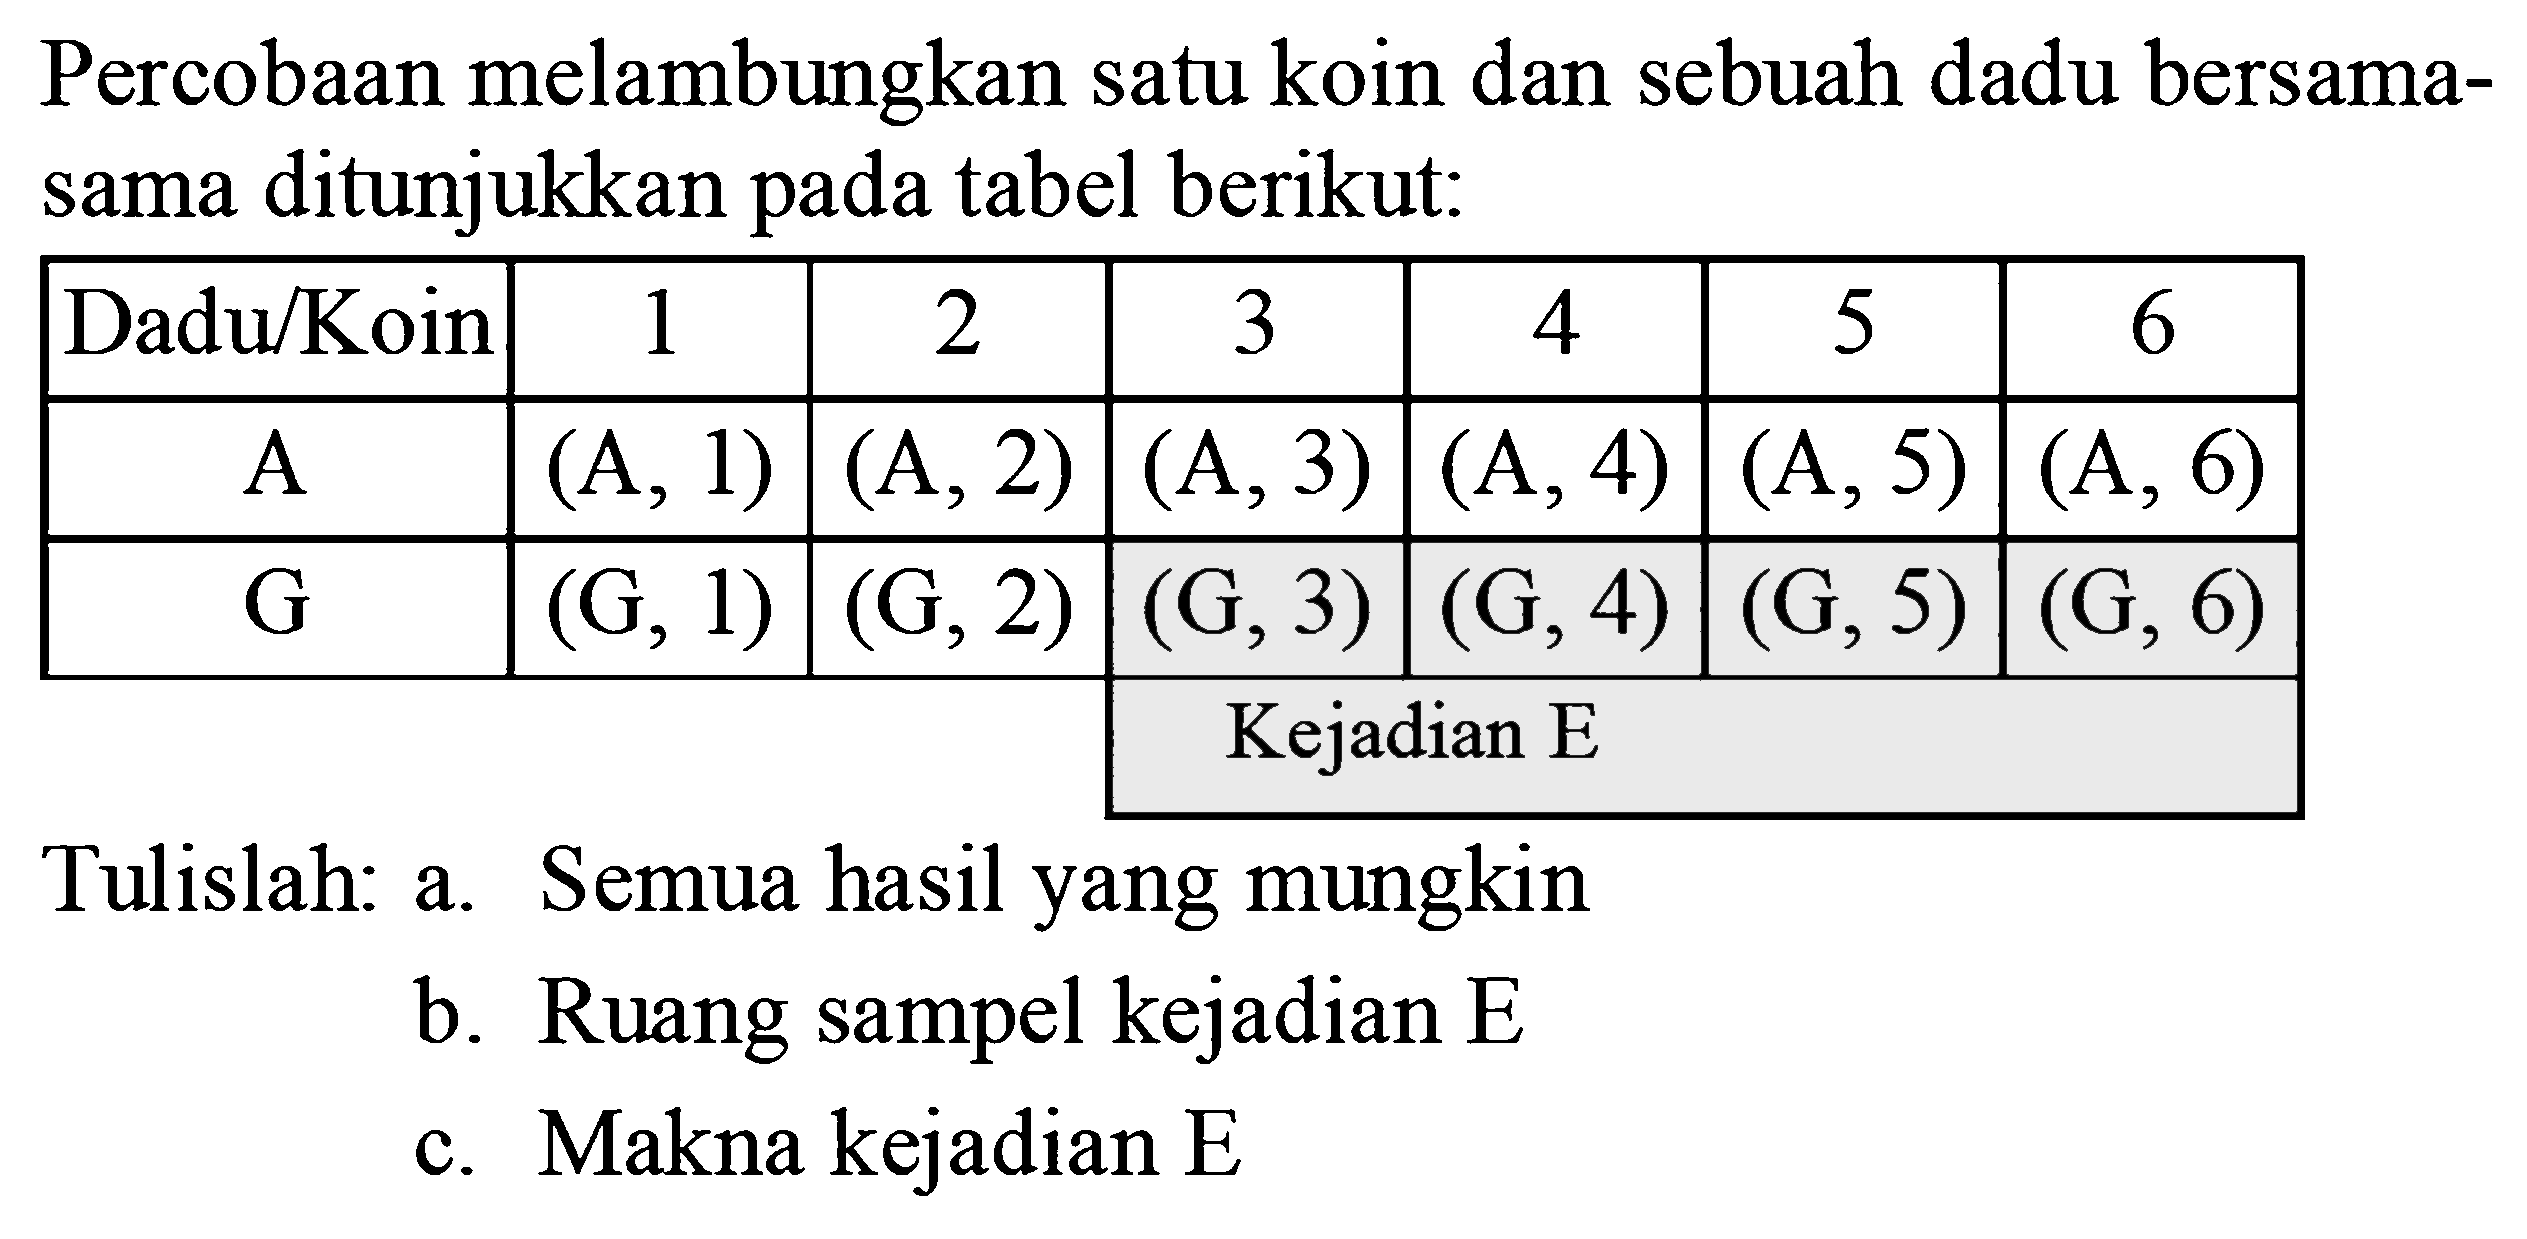 Percobaan melambungkan satu koin dan sebuah dadu bersamasama ditunjukkan pada tabel berikut:Dadu/Koin 1 2 3 4 5 6A (A, 1) (A, 2) (A, 3) (A, 4) (A, 5) (A, 6)G (G, 1) (G, 2) (G, 3) (G, 4) (G, 5) (G, 6)Kejadian ETulislah: a. Semua hasil yang mungkinb. Ruang sampel kejadian Ec. Makna kejadian E